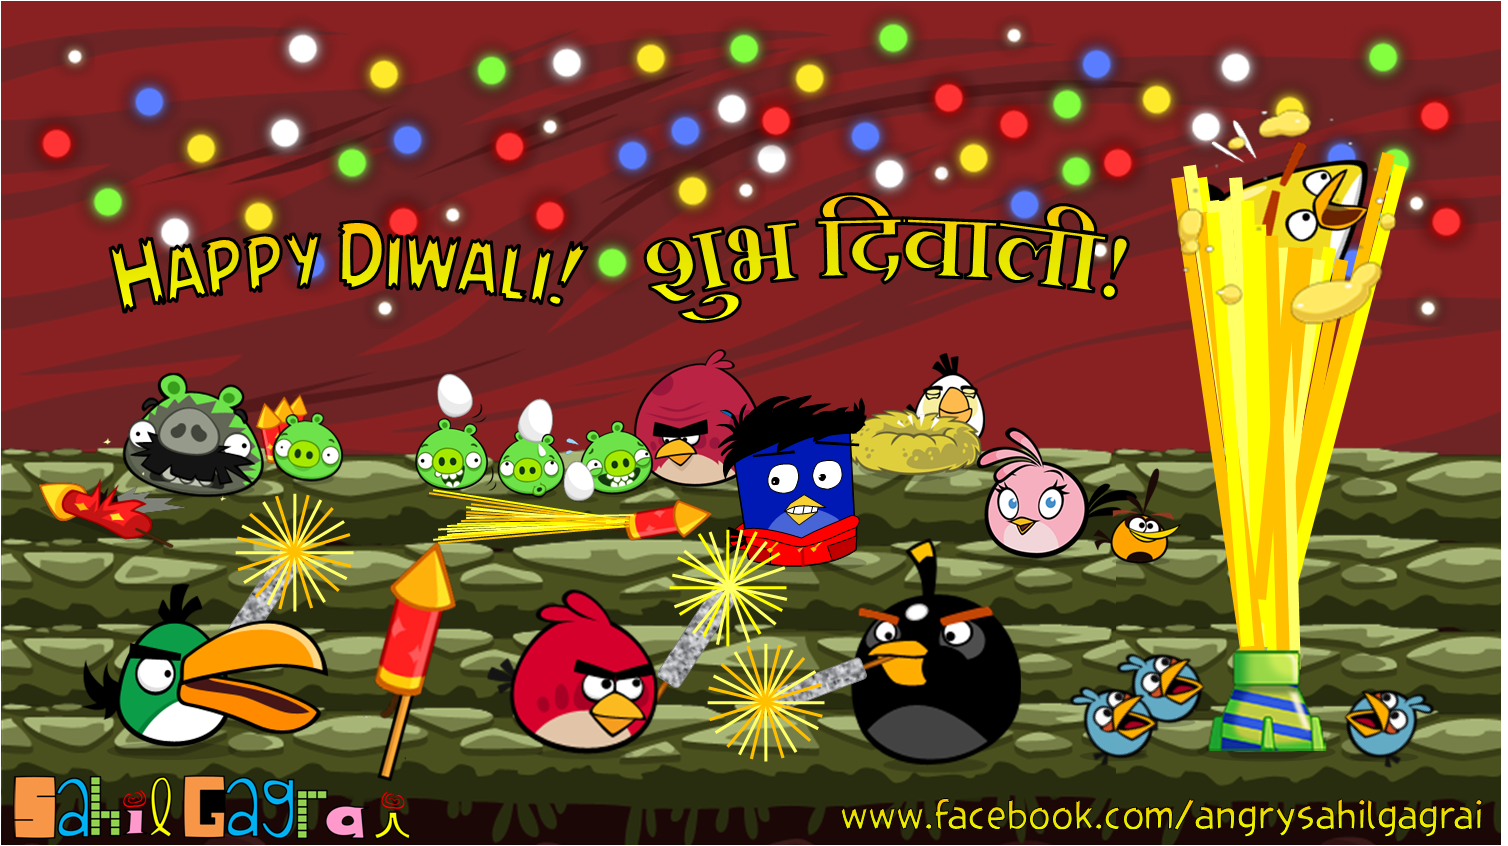 Angry Birds celebrating Diwali!